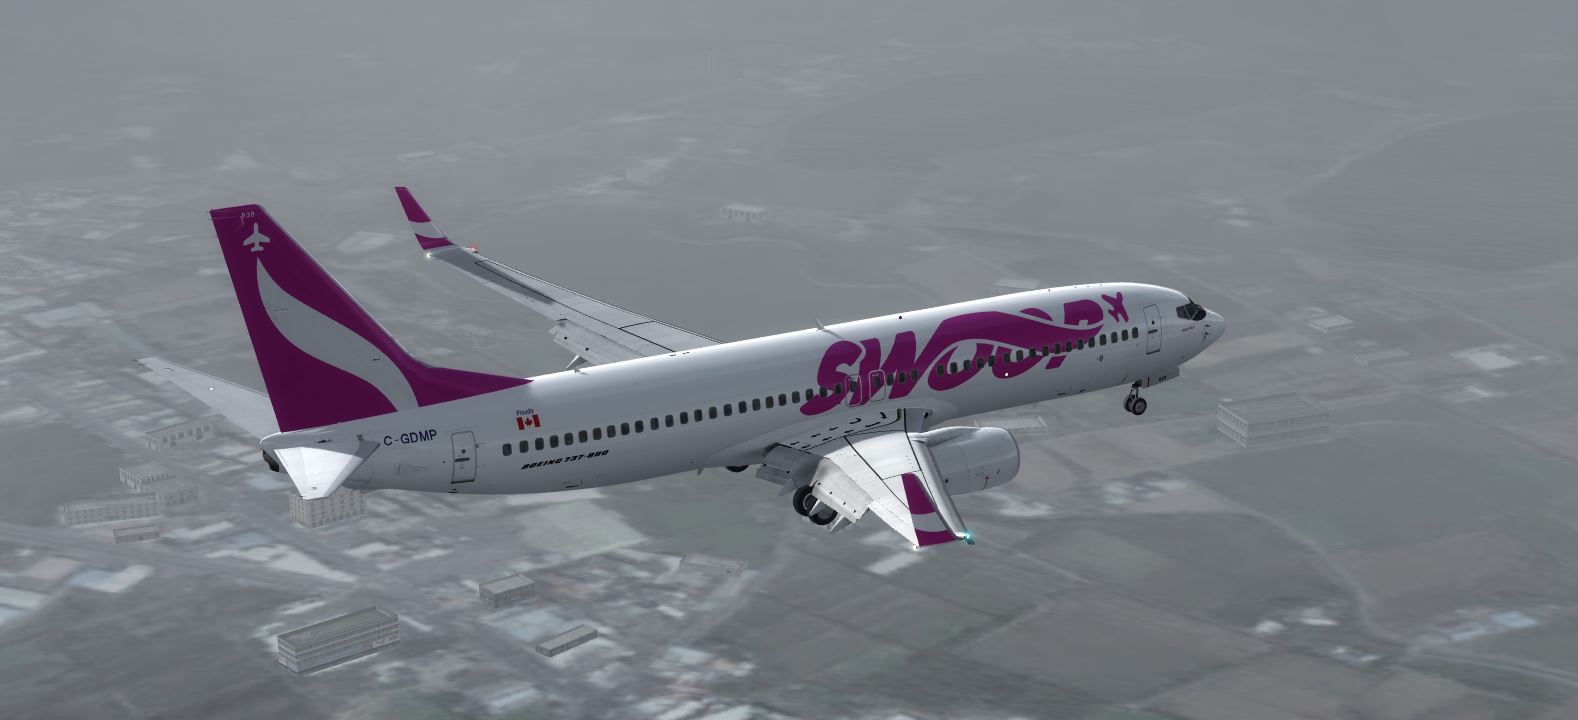 B737-800 Swoop Airlines-3979 